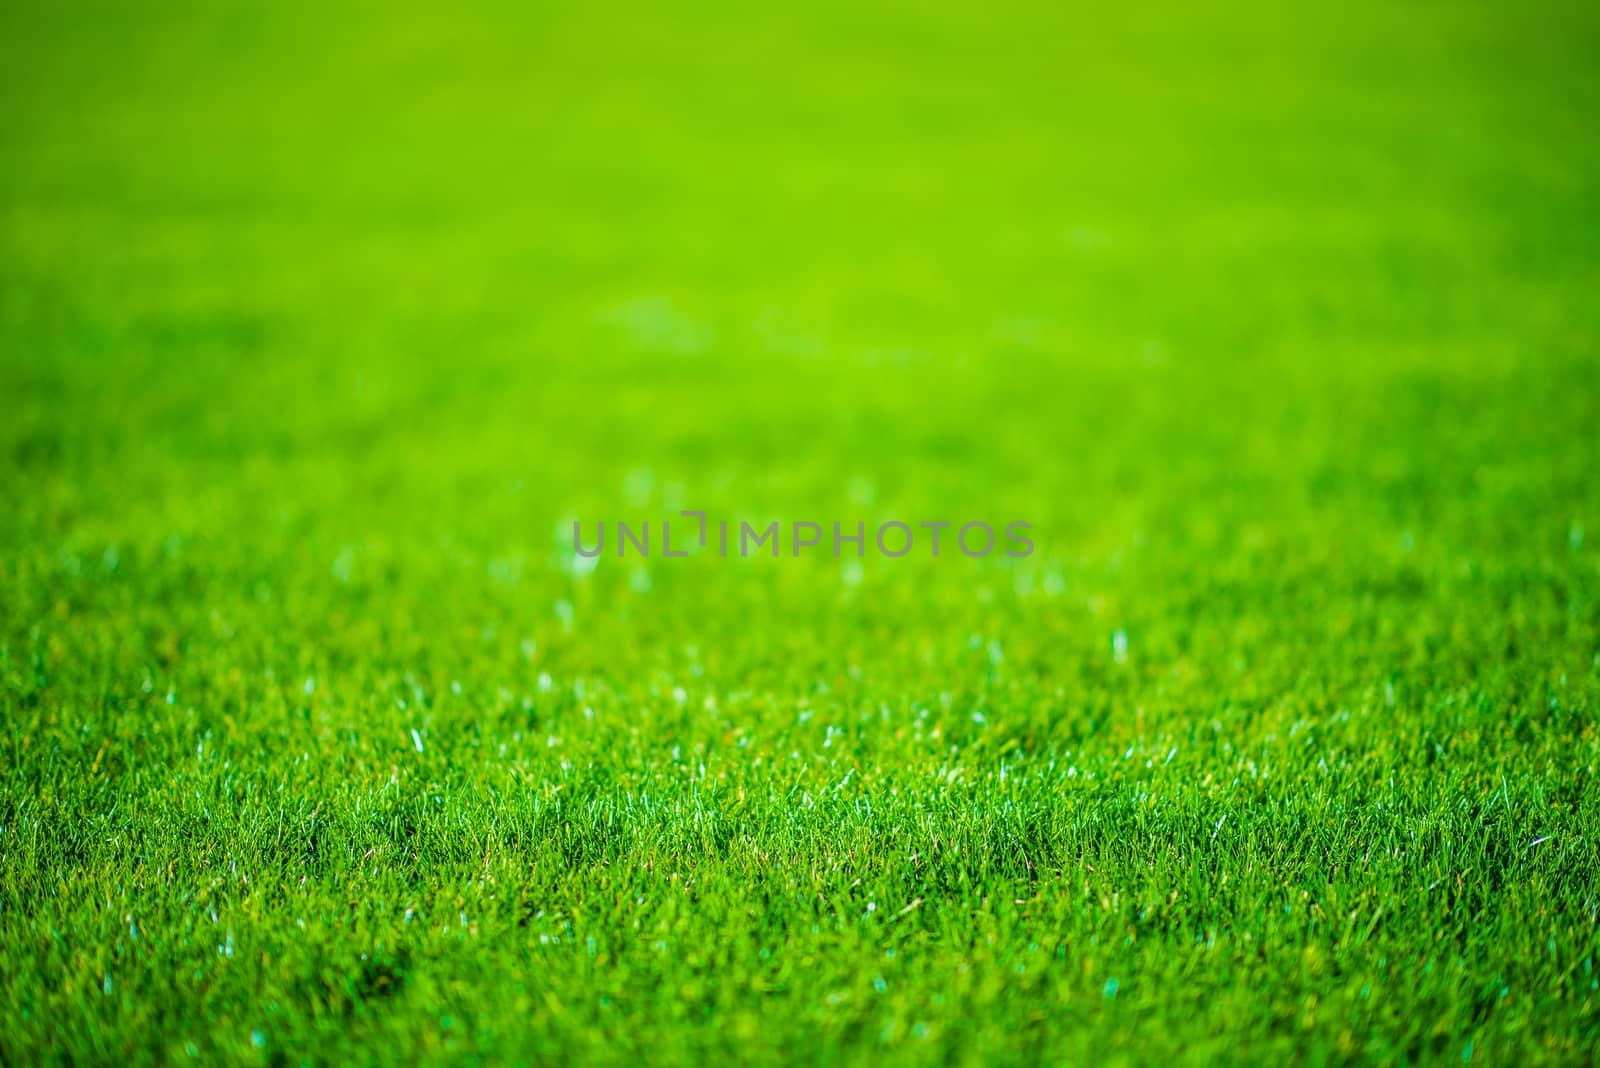 Grass Field Defocused Background Photo.